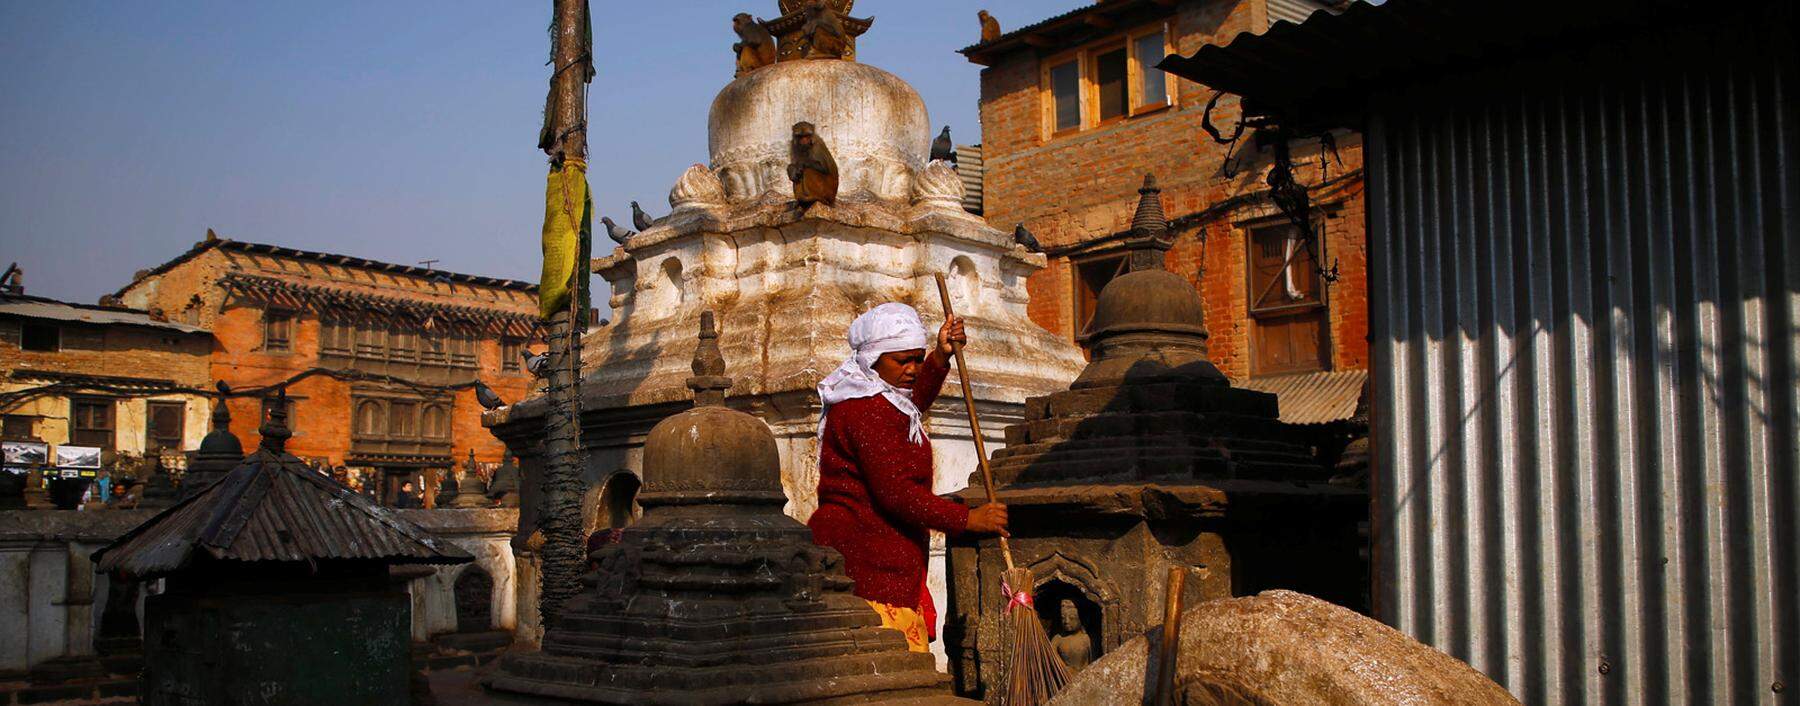 A woman sweeps at the premises of Swayambhunath Stupa in Kathmandu